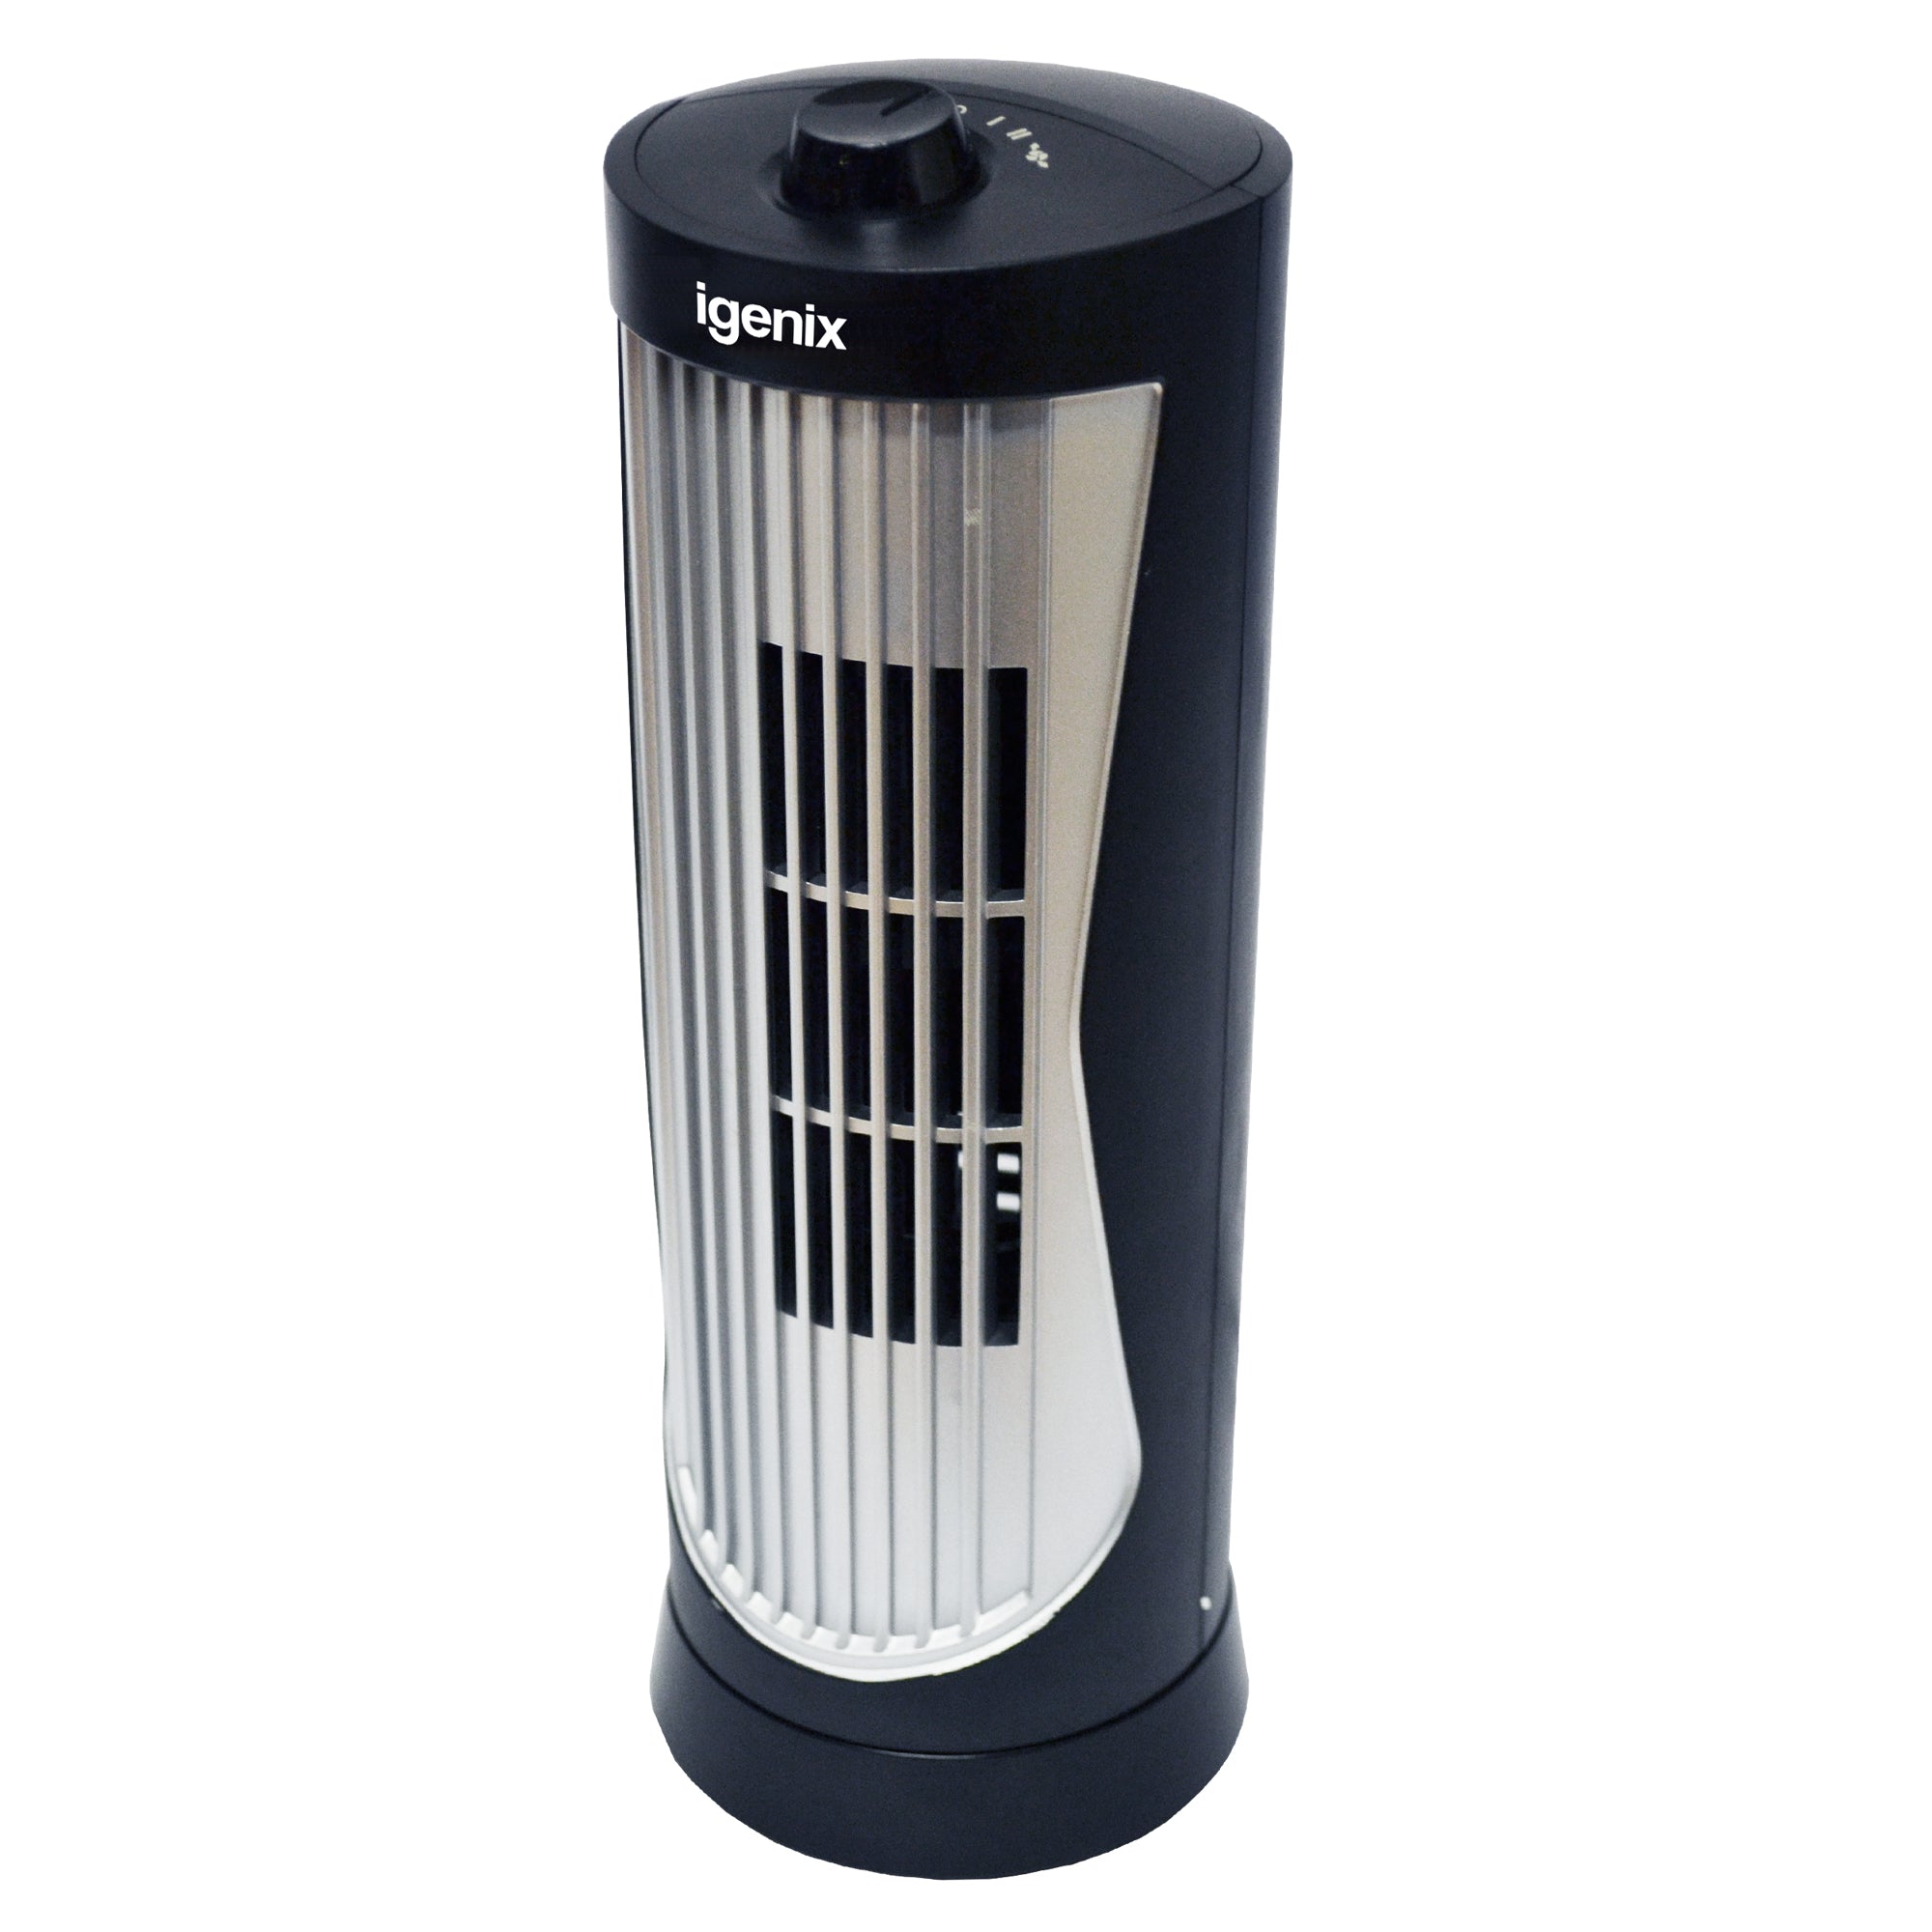 Mini Tower Fan, Oscillating, 12 Inch, Black